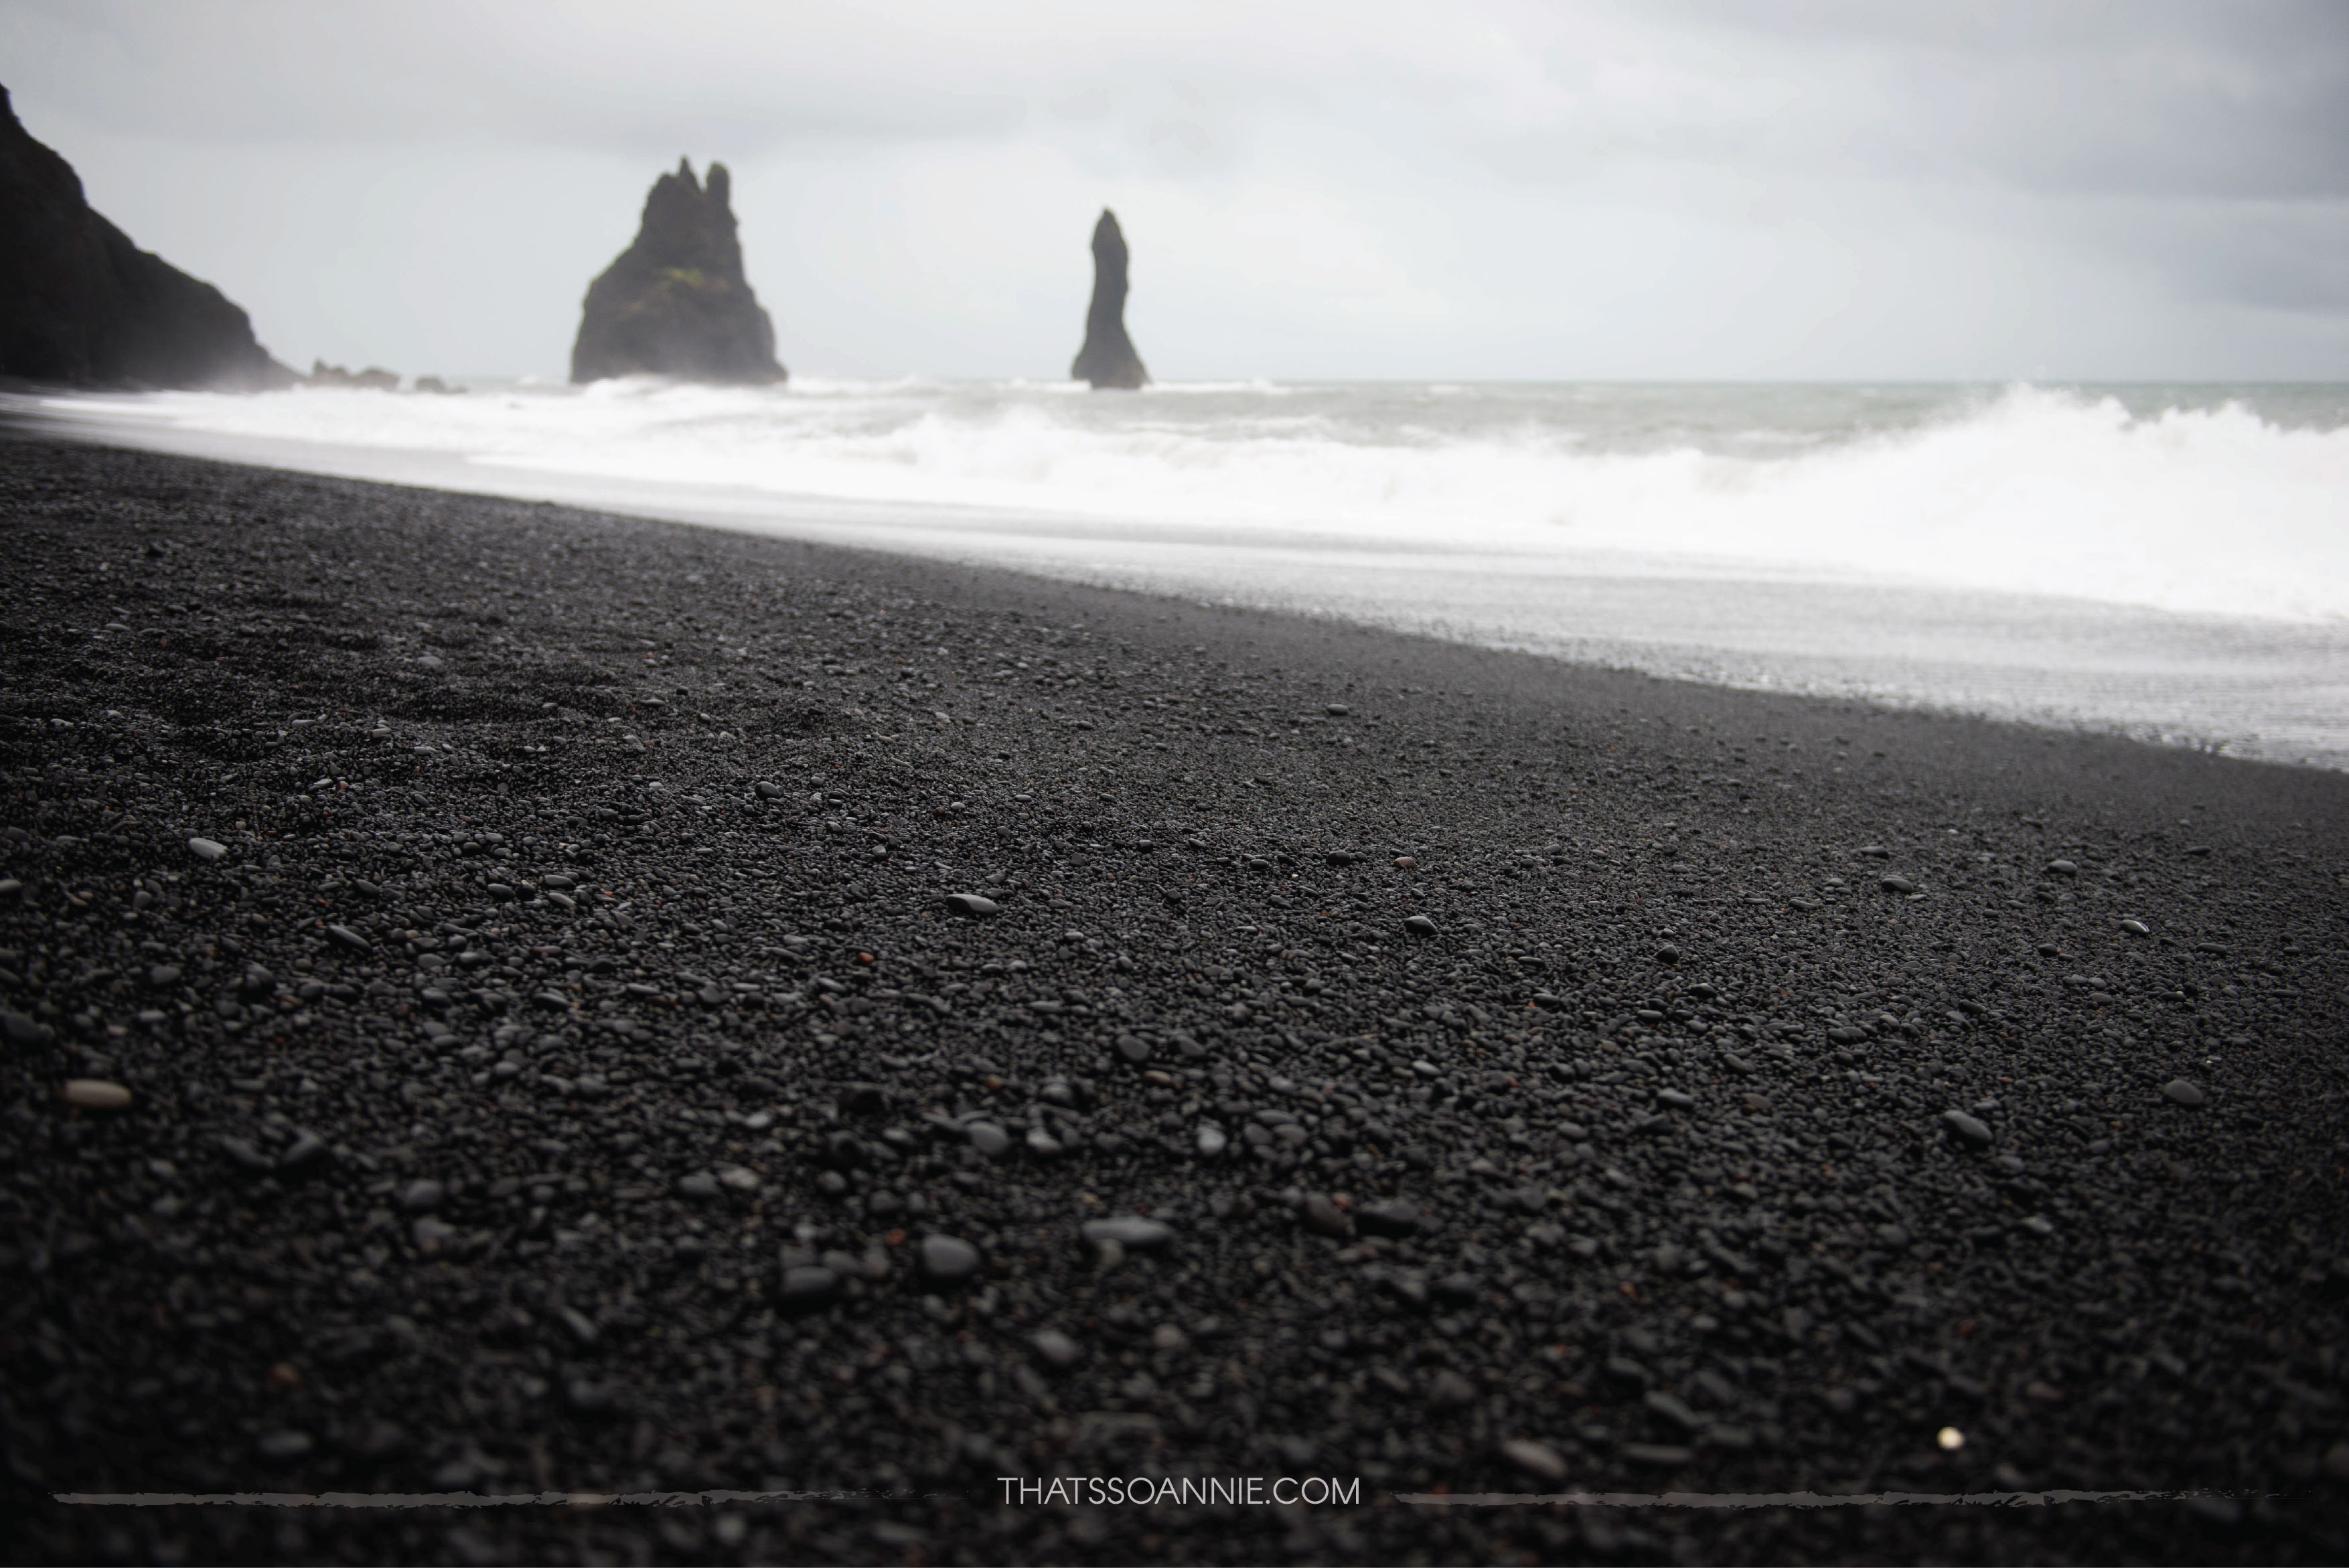 The basalt stacks of Reynisdrangar against the black pebbles of the Reynisfjara beach